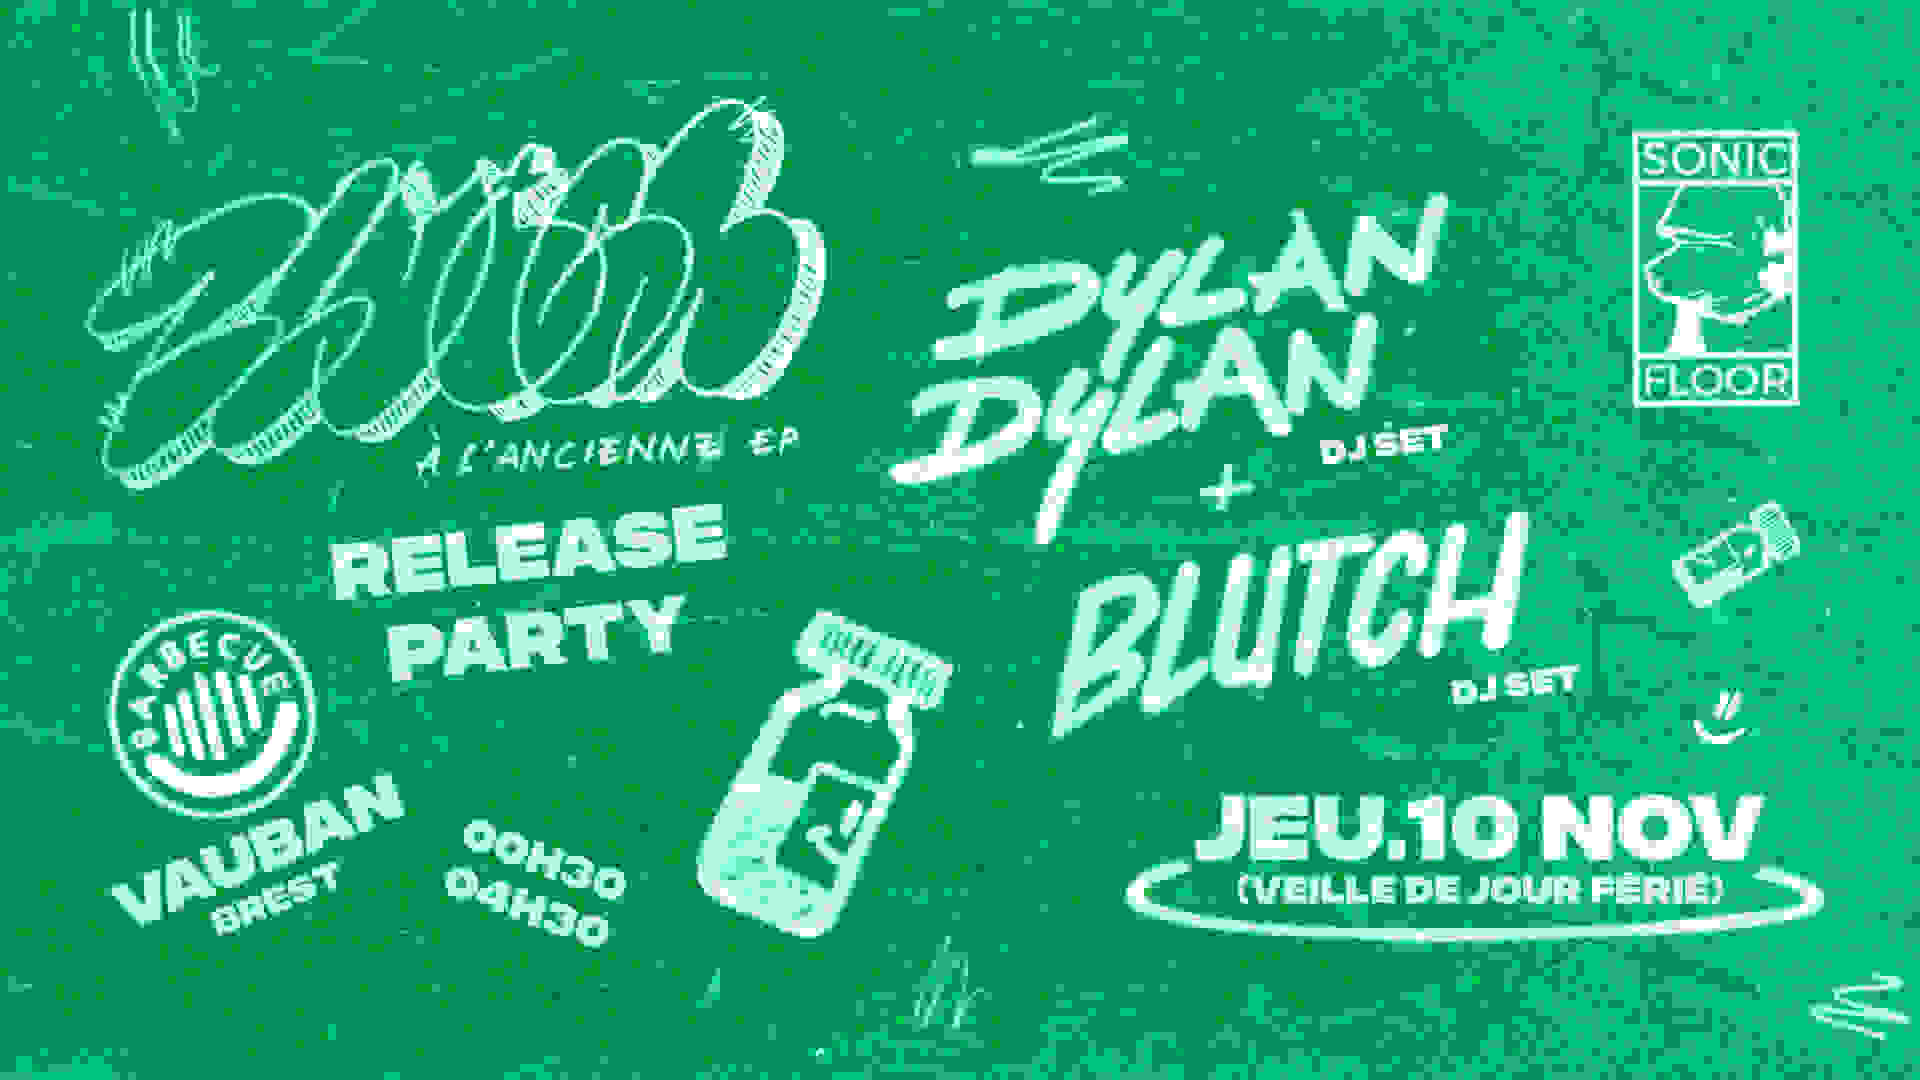 — Blutch Release Party (Vauban) : Dylan Dylan + Blutch